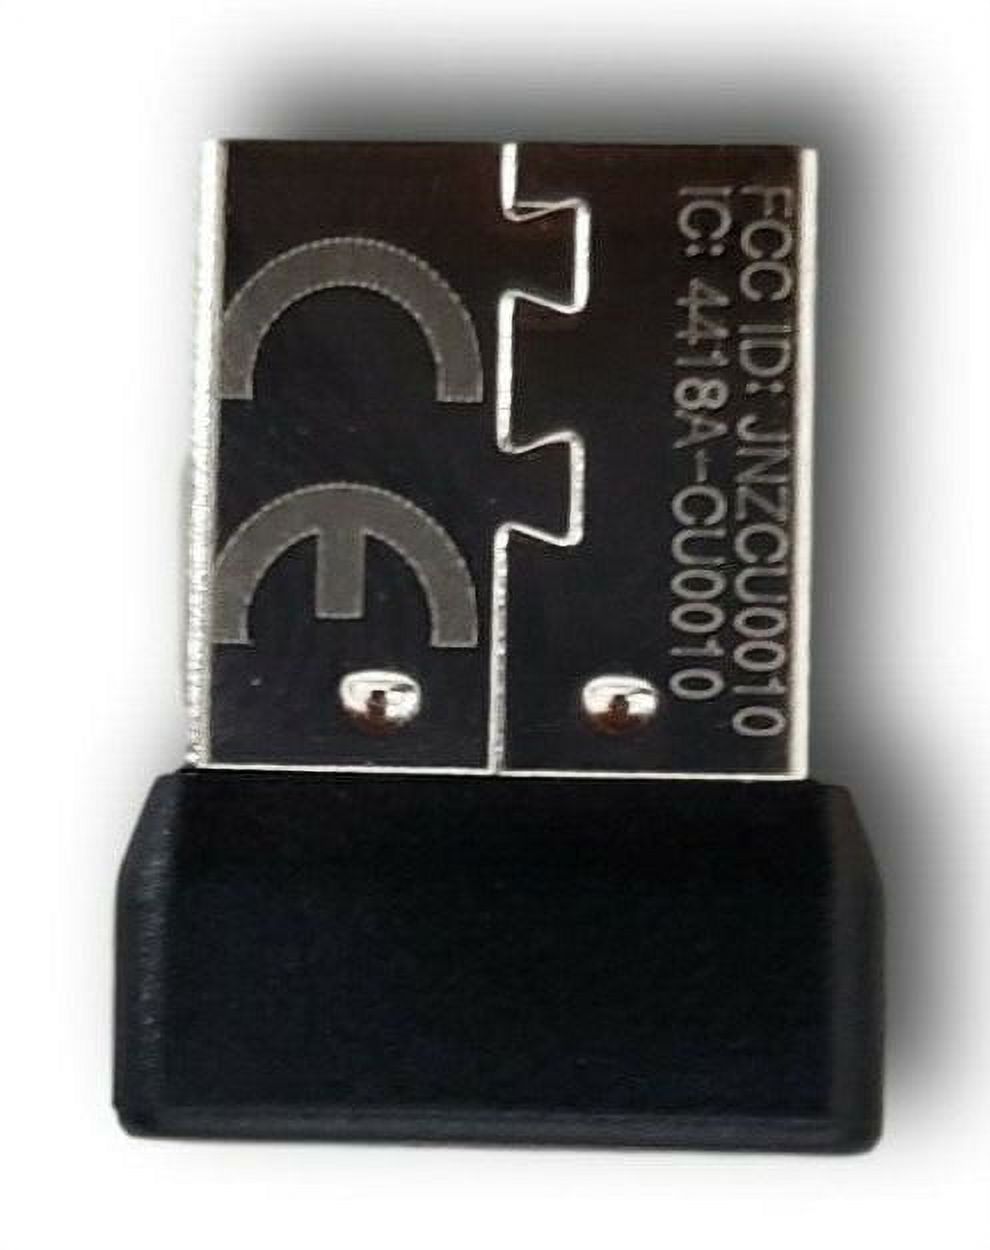 Logitech USB Nano Receiver For MK270 Combo, MK235, M220, M185 mouse, MK240n, MK345, MK320, M150, K345, K260, M275, M330, M305, K270, M525 - 993-001106 - image 2 of 2